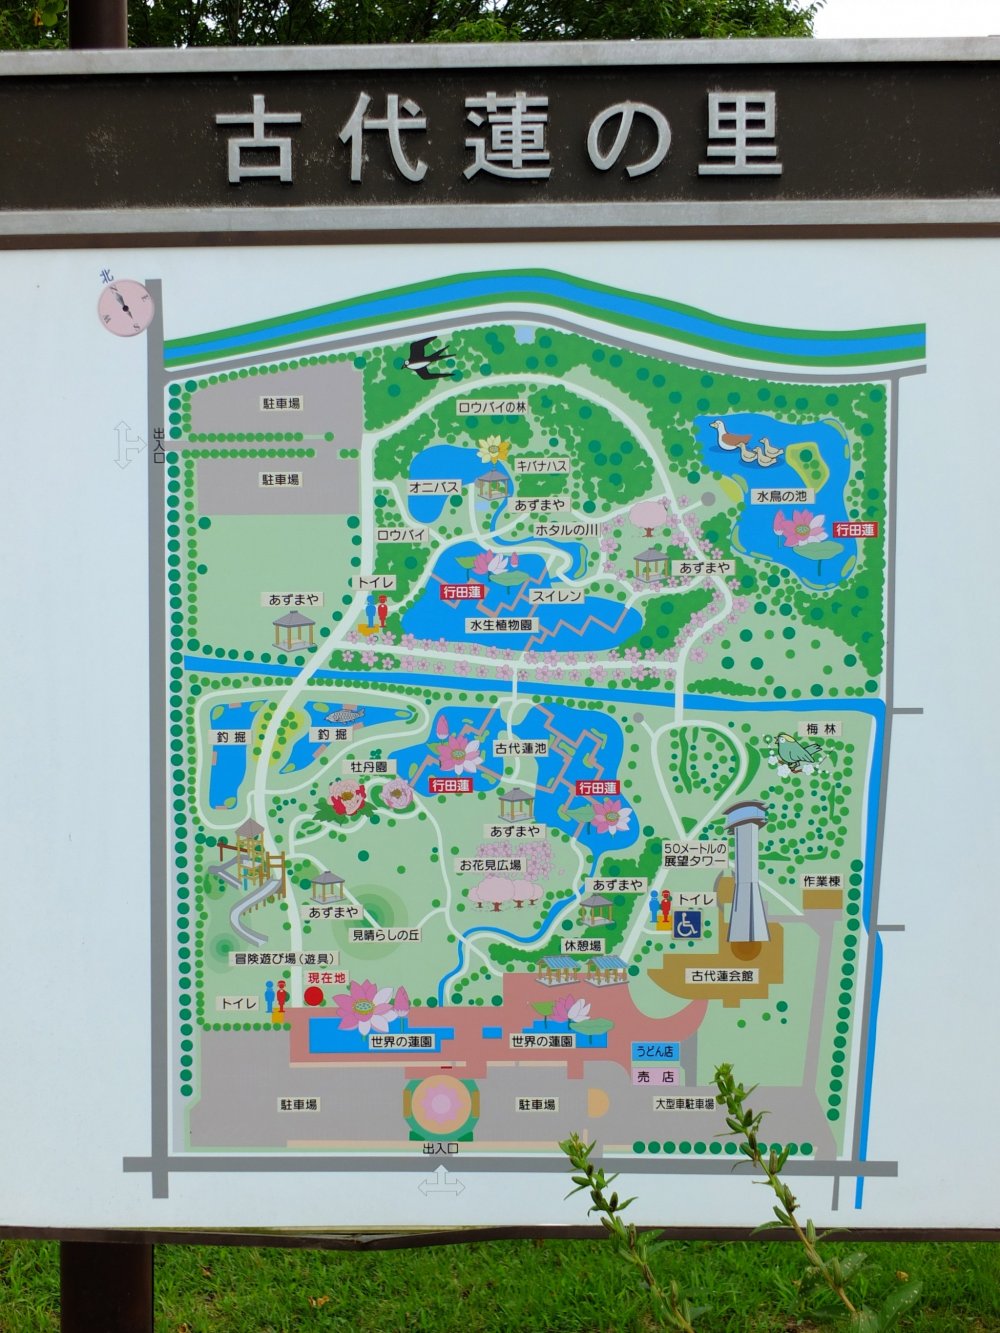 The park map shows five different lotus ponds